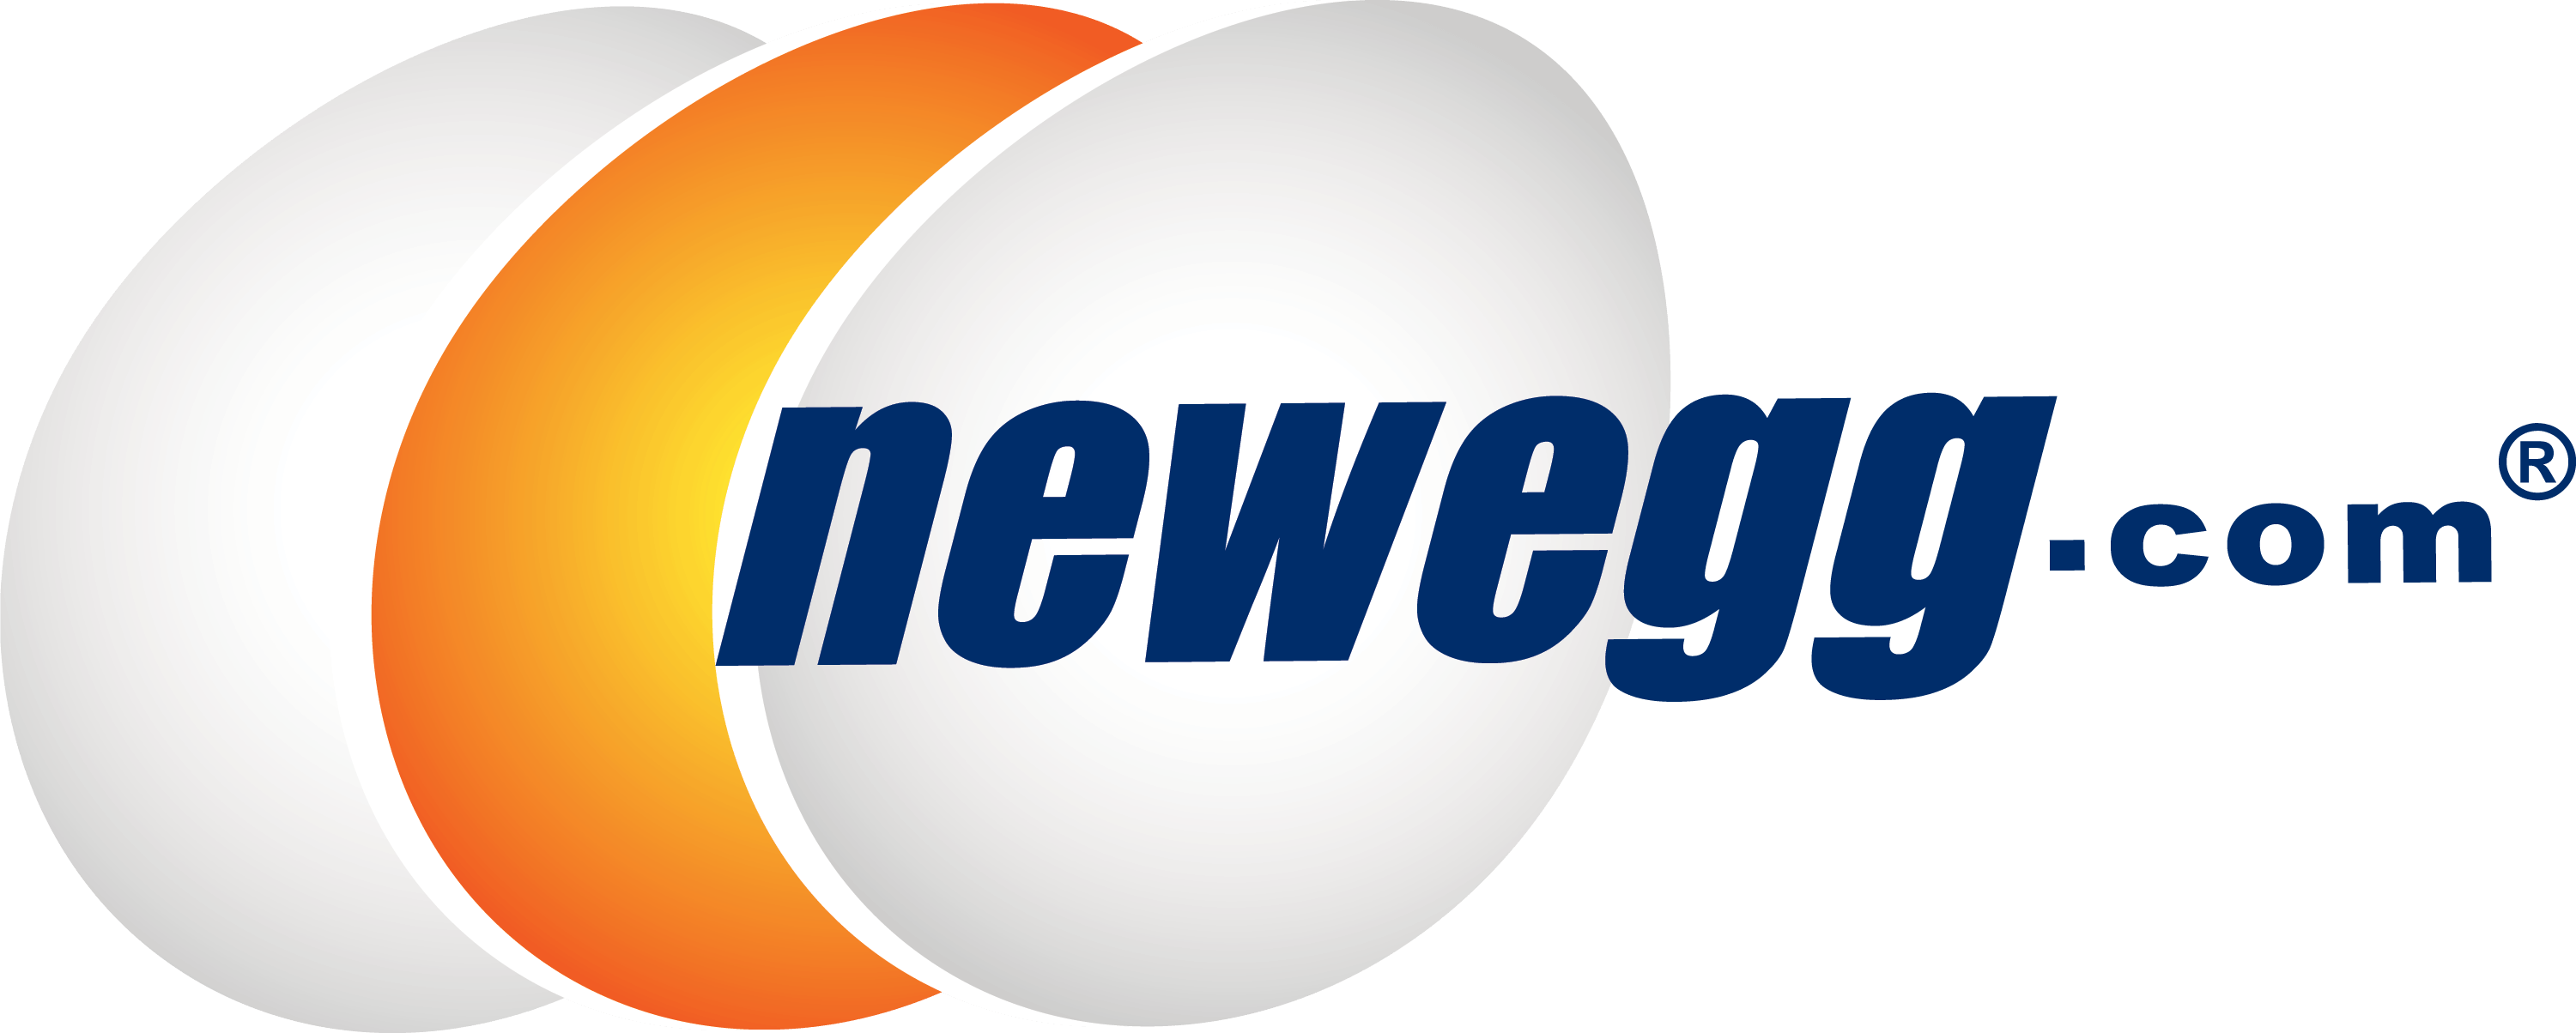 Newegg Logo - Newegg Now Accepts Bitcoin